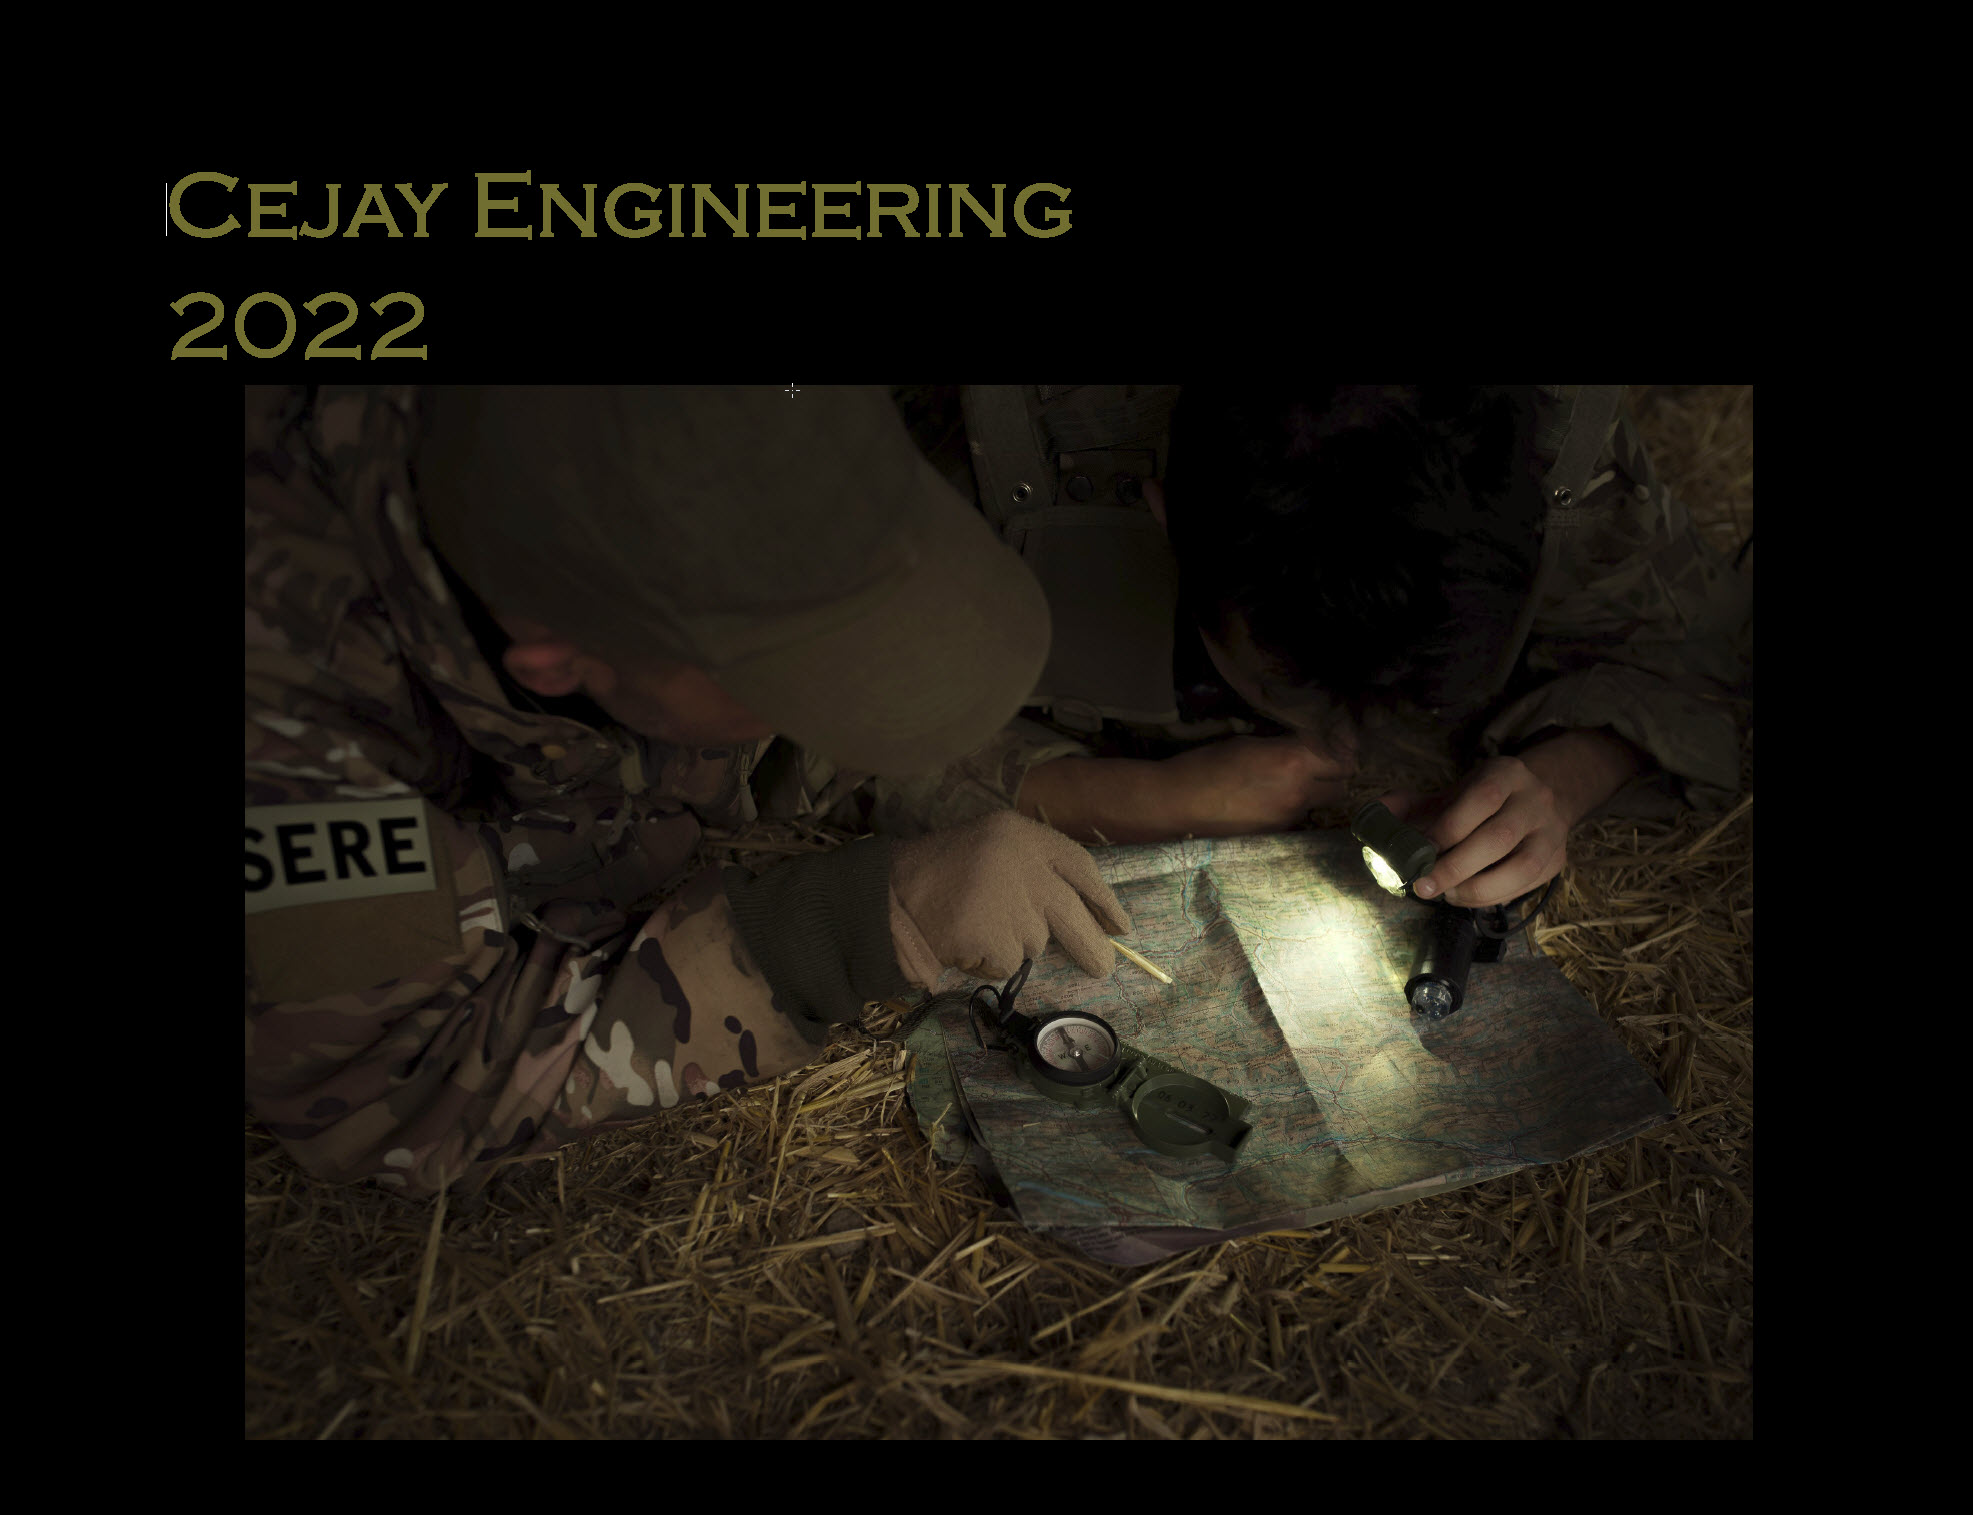 Cejay Engineering Product Catalog - 2022